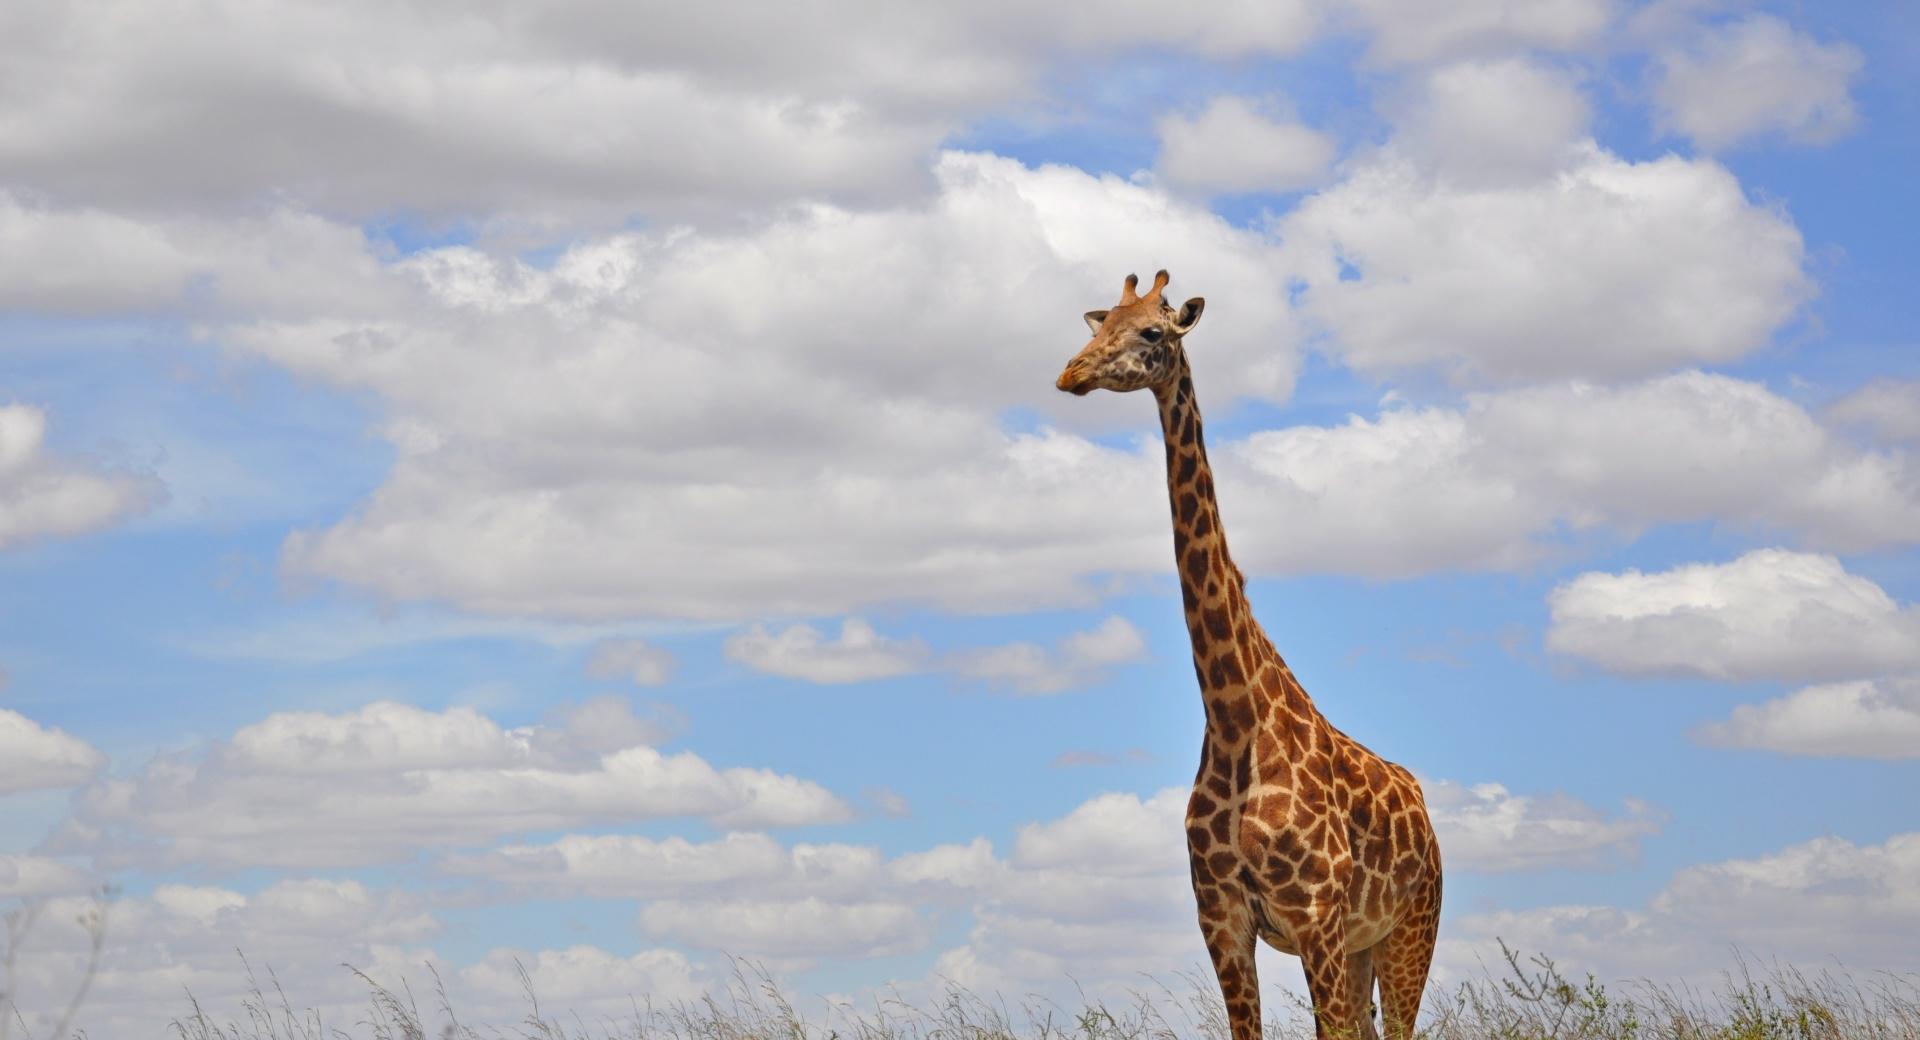 Giraffe in Nairobi Park wallpapers HD quality